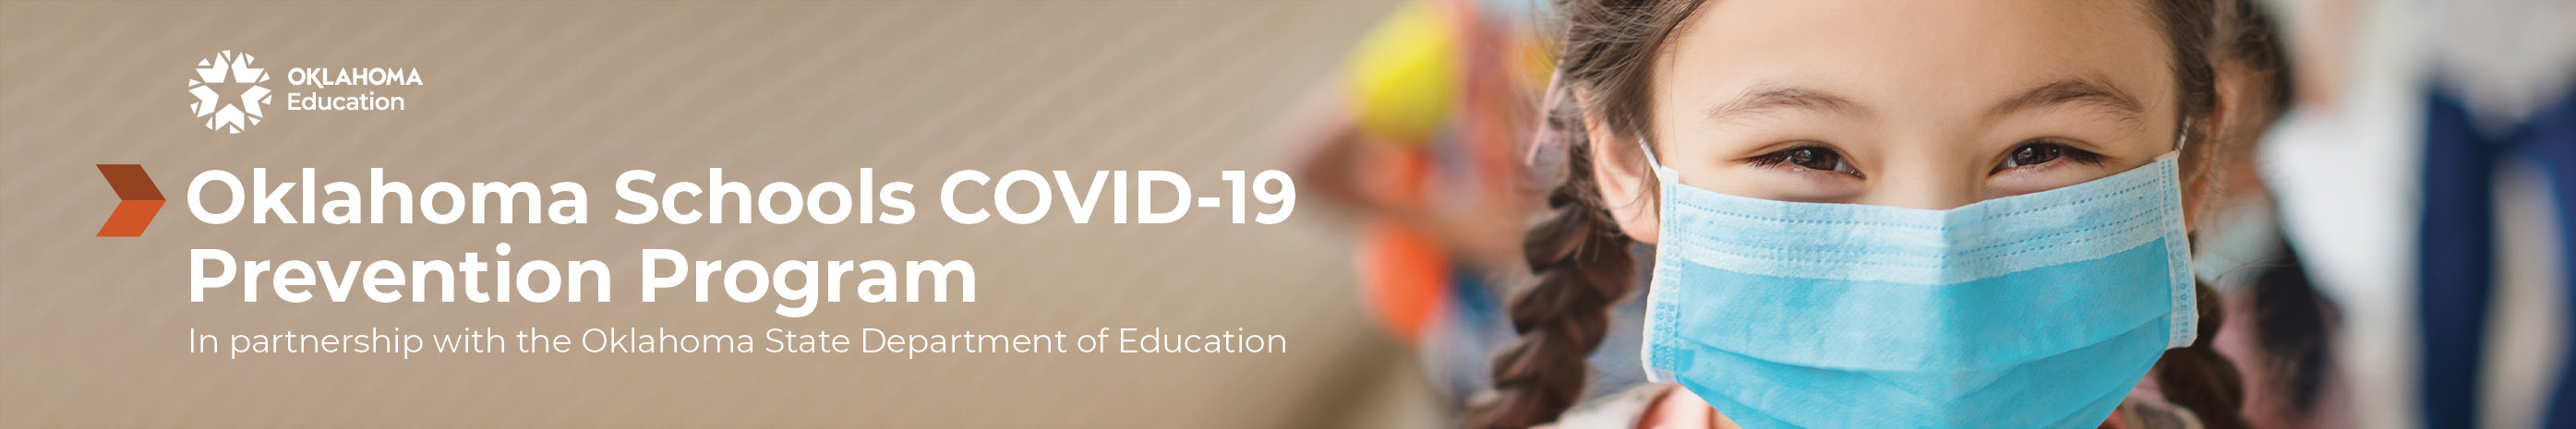 2021_OSDH_Schools COVID-19 Prevention Program Hero-v4